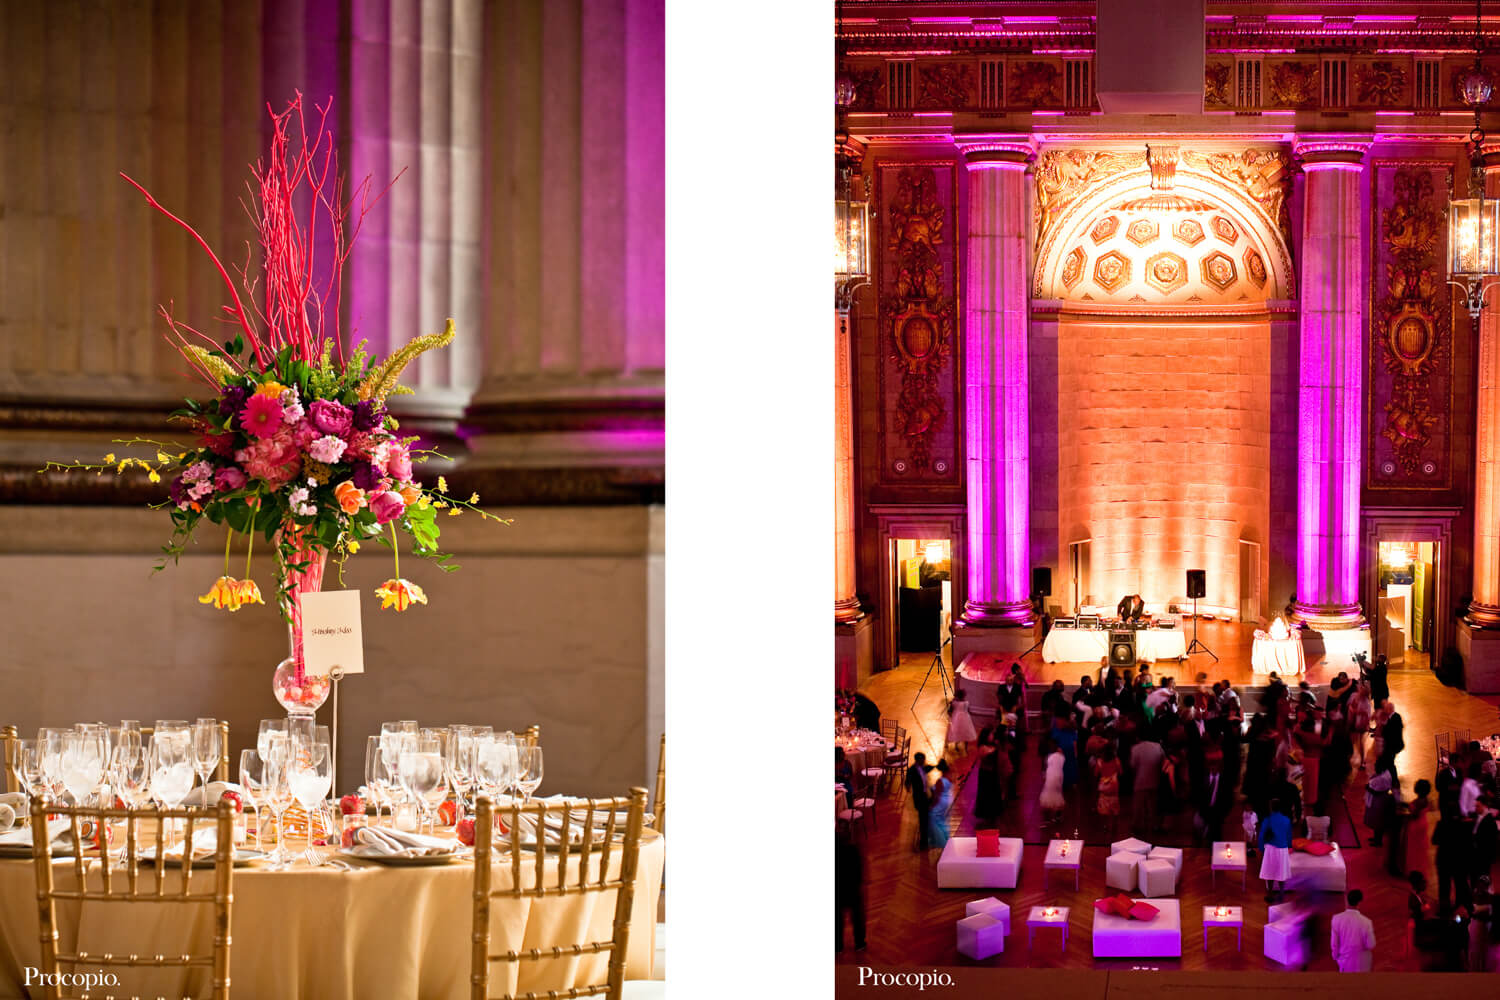 Wedding reception in pink lighting - Cherry Blossom Weddings and Events - best Washington DC wedding planner - photo by Procopio Photography